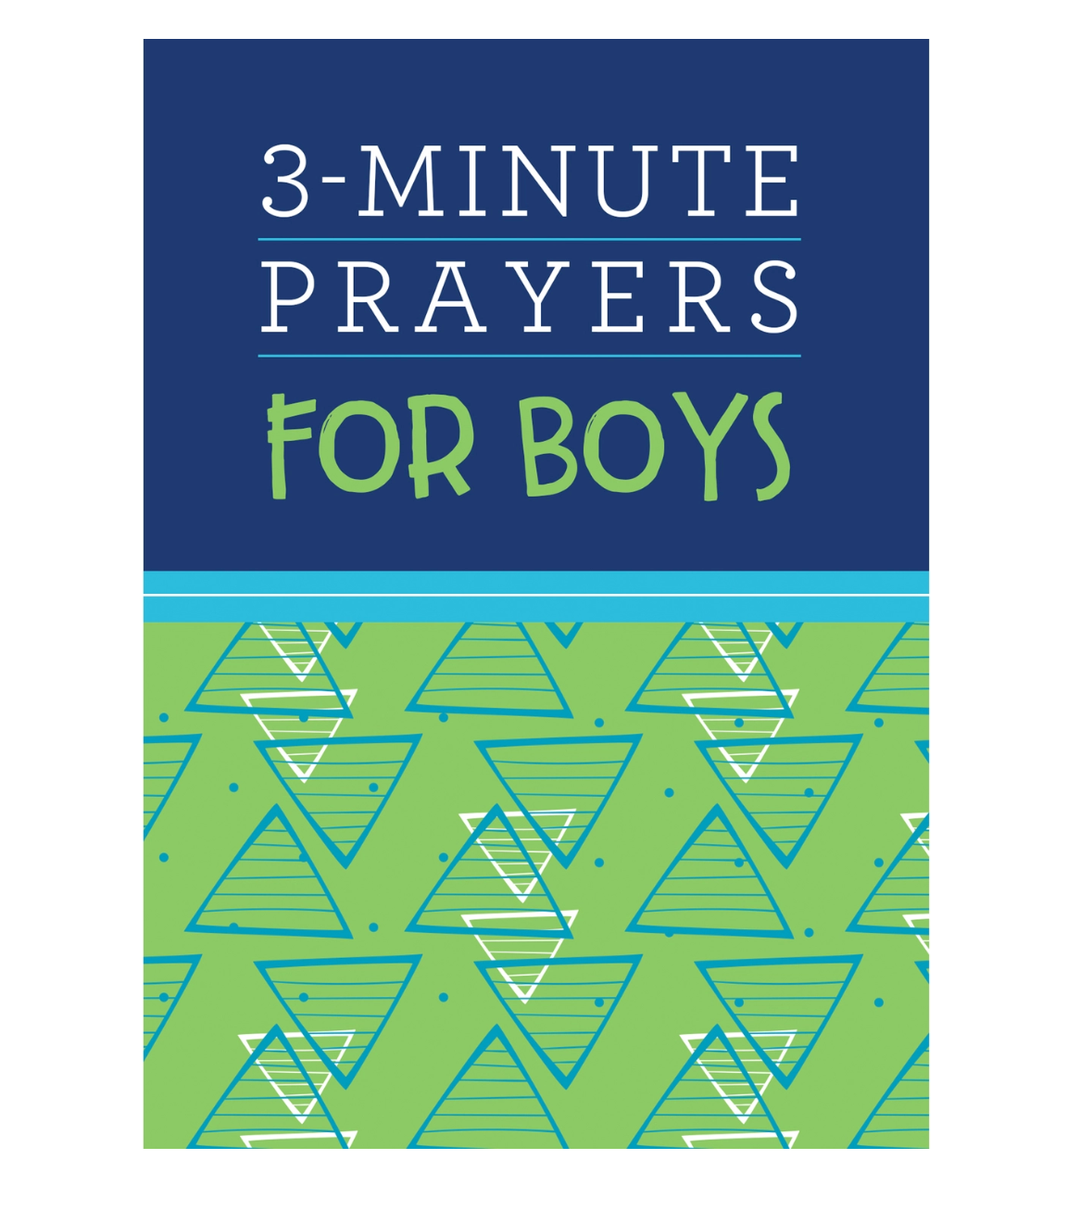 3 MINUTE PRAYERS FOR BOYS